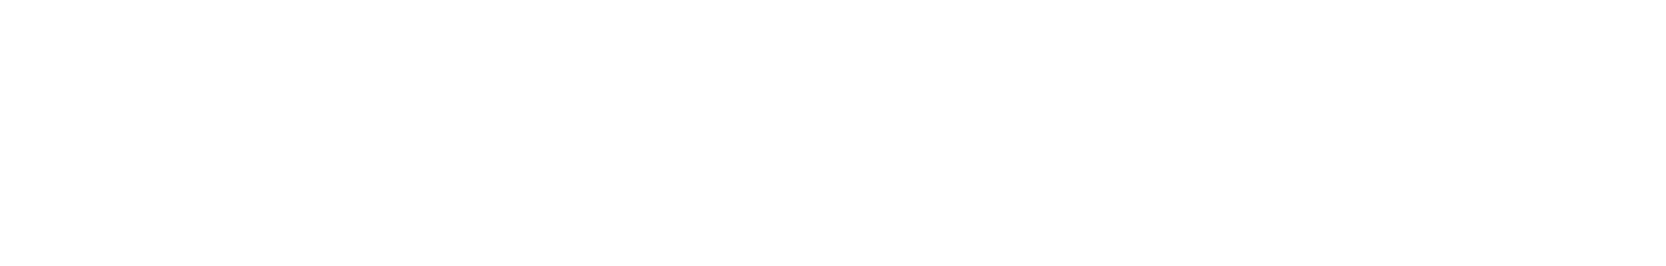 Torrid logo grand pour les fonds sombres (PNG transparent)